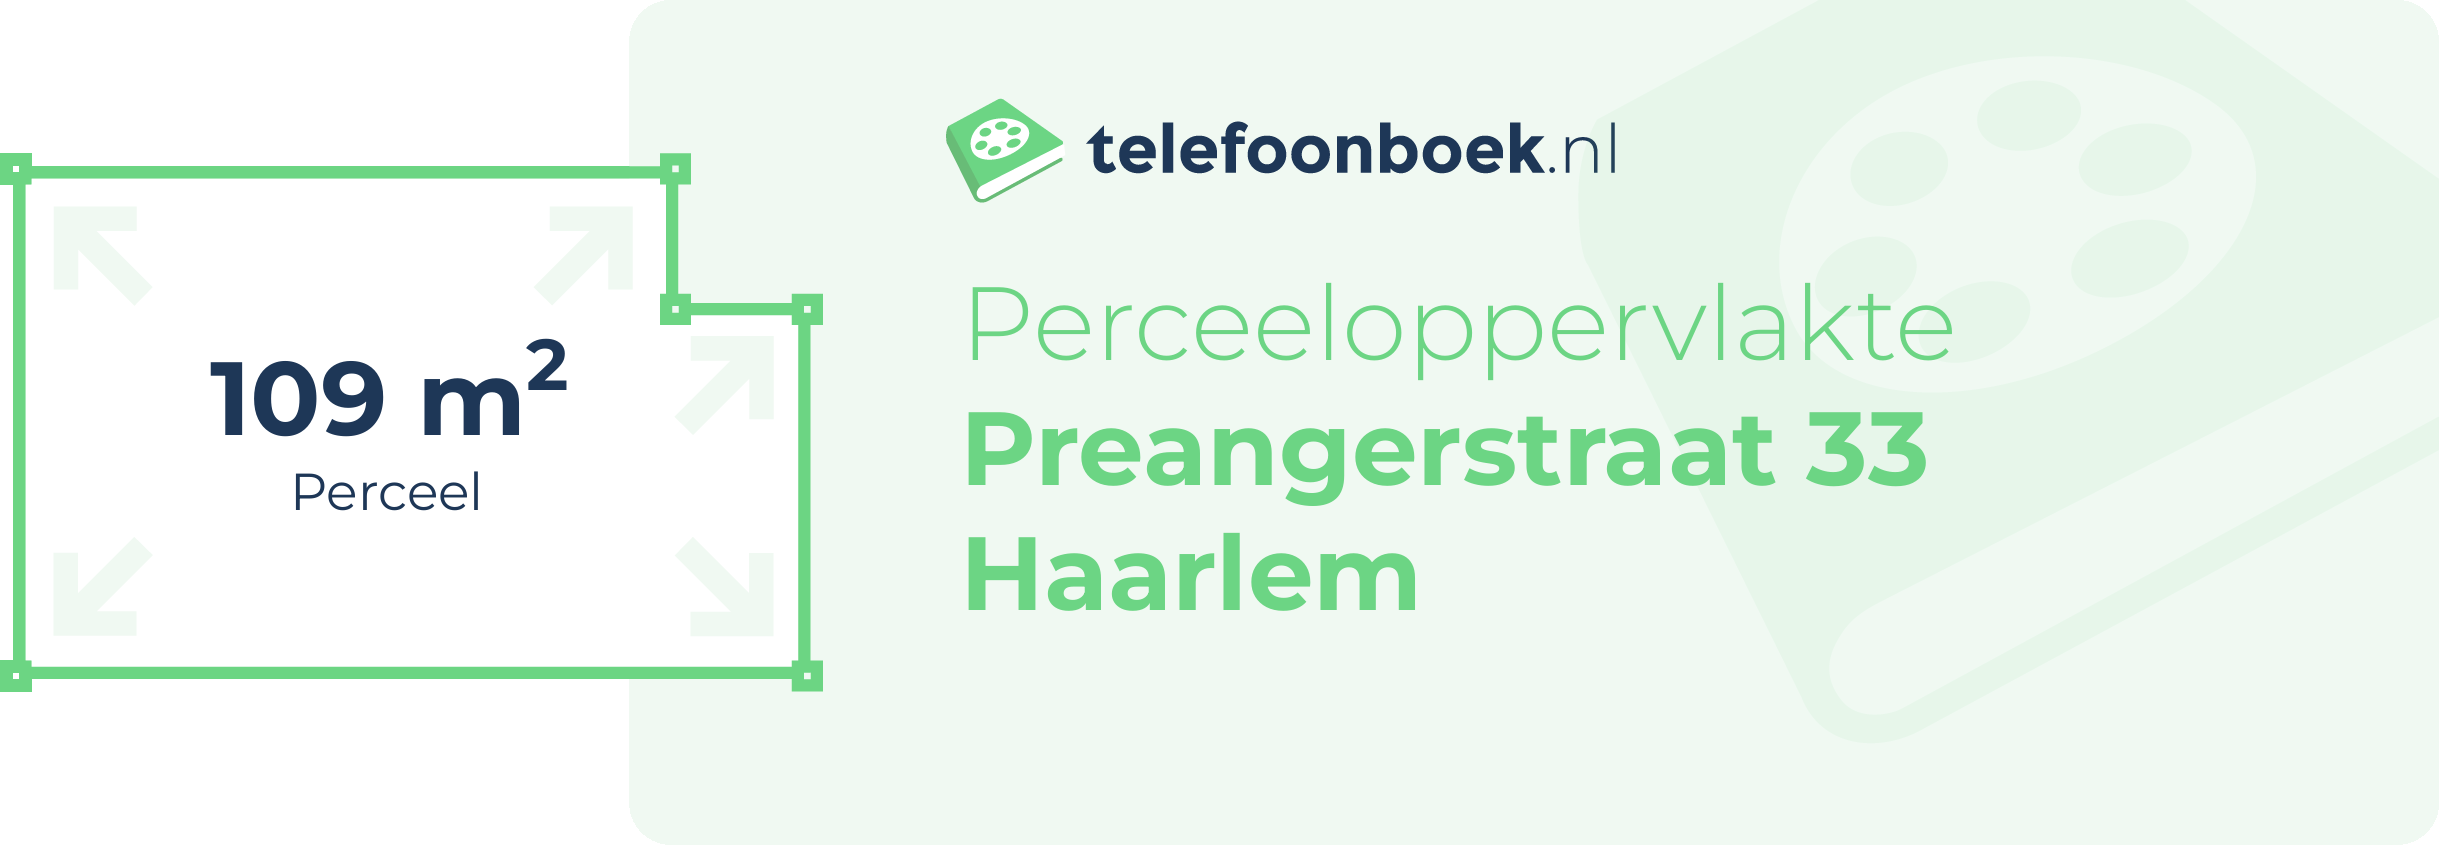 Perceeloppervlakte Preangerstraat 33 Haarlem